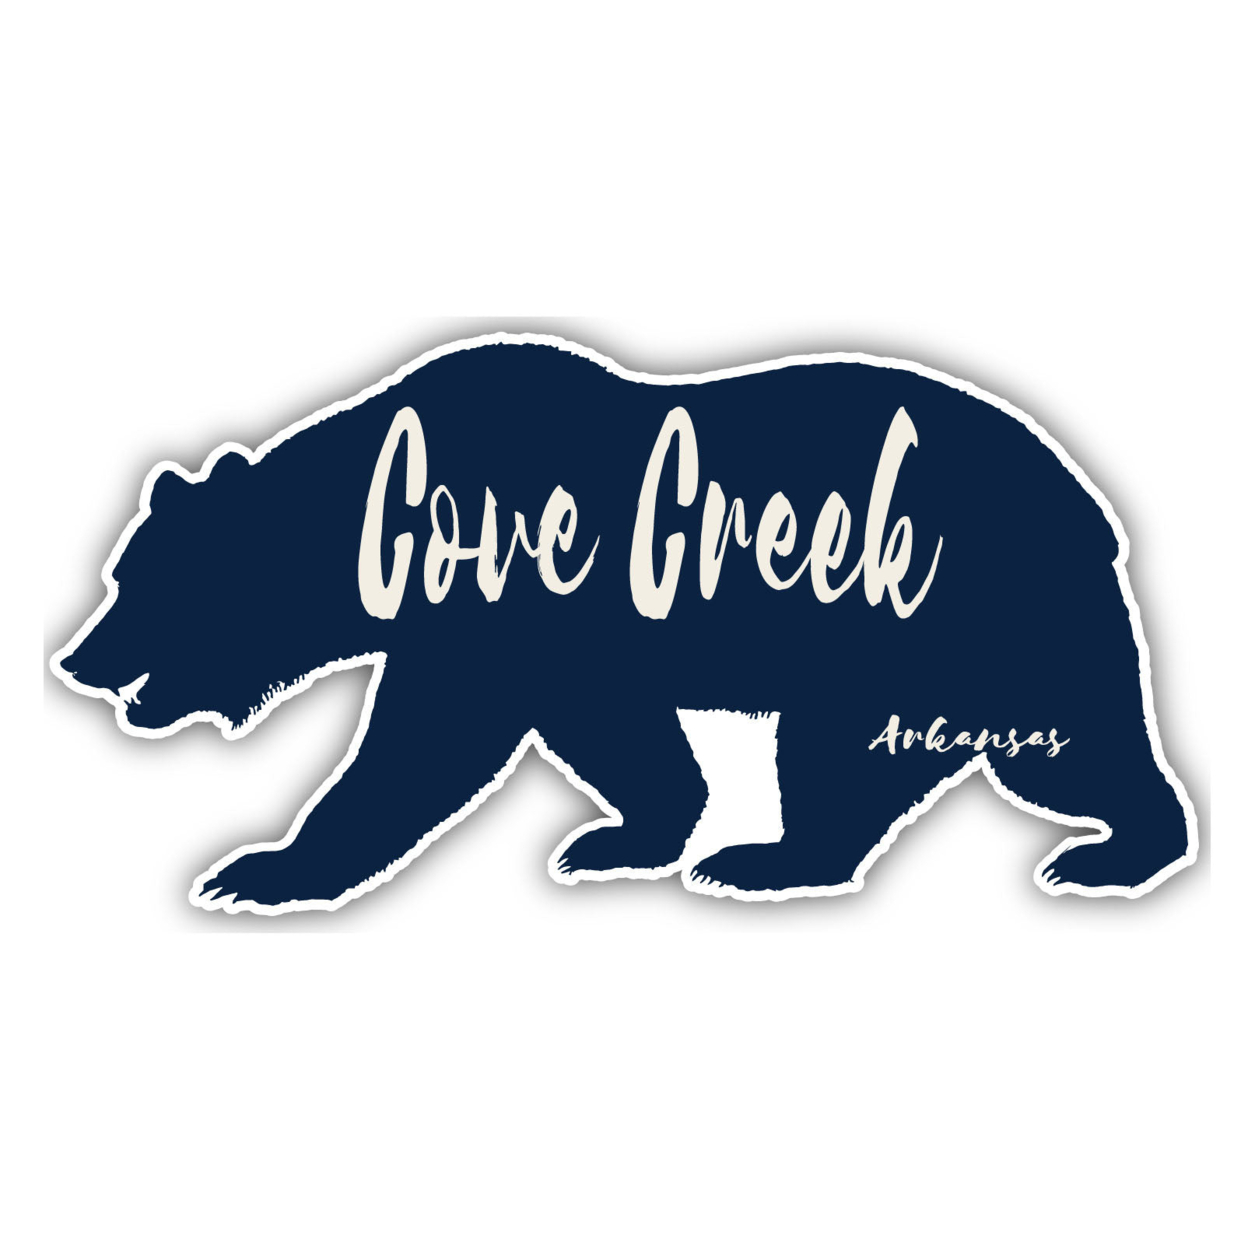 Cove Creek Arkansas Souvenir Decorative Stickers (Choose Theme And Size) - Single Unit, 8-Inch, Bear